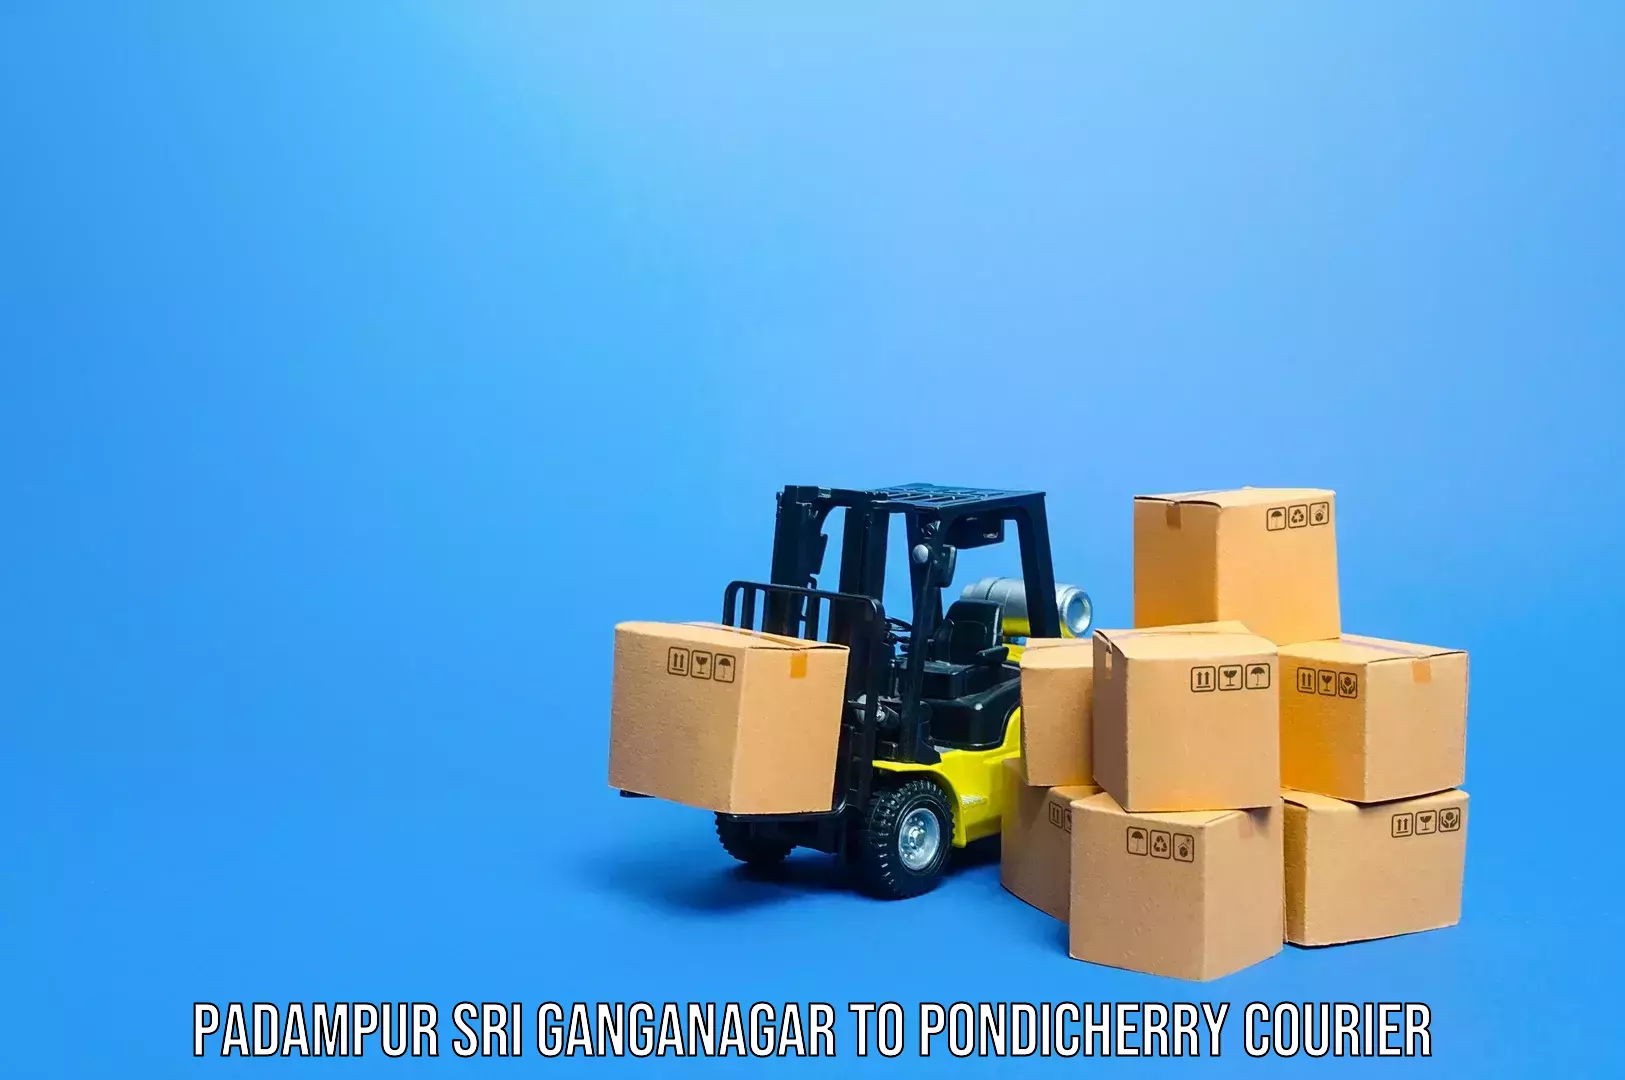 Baggage delivery technology Padampur Sri Ganganagar to Metttupalayam